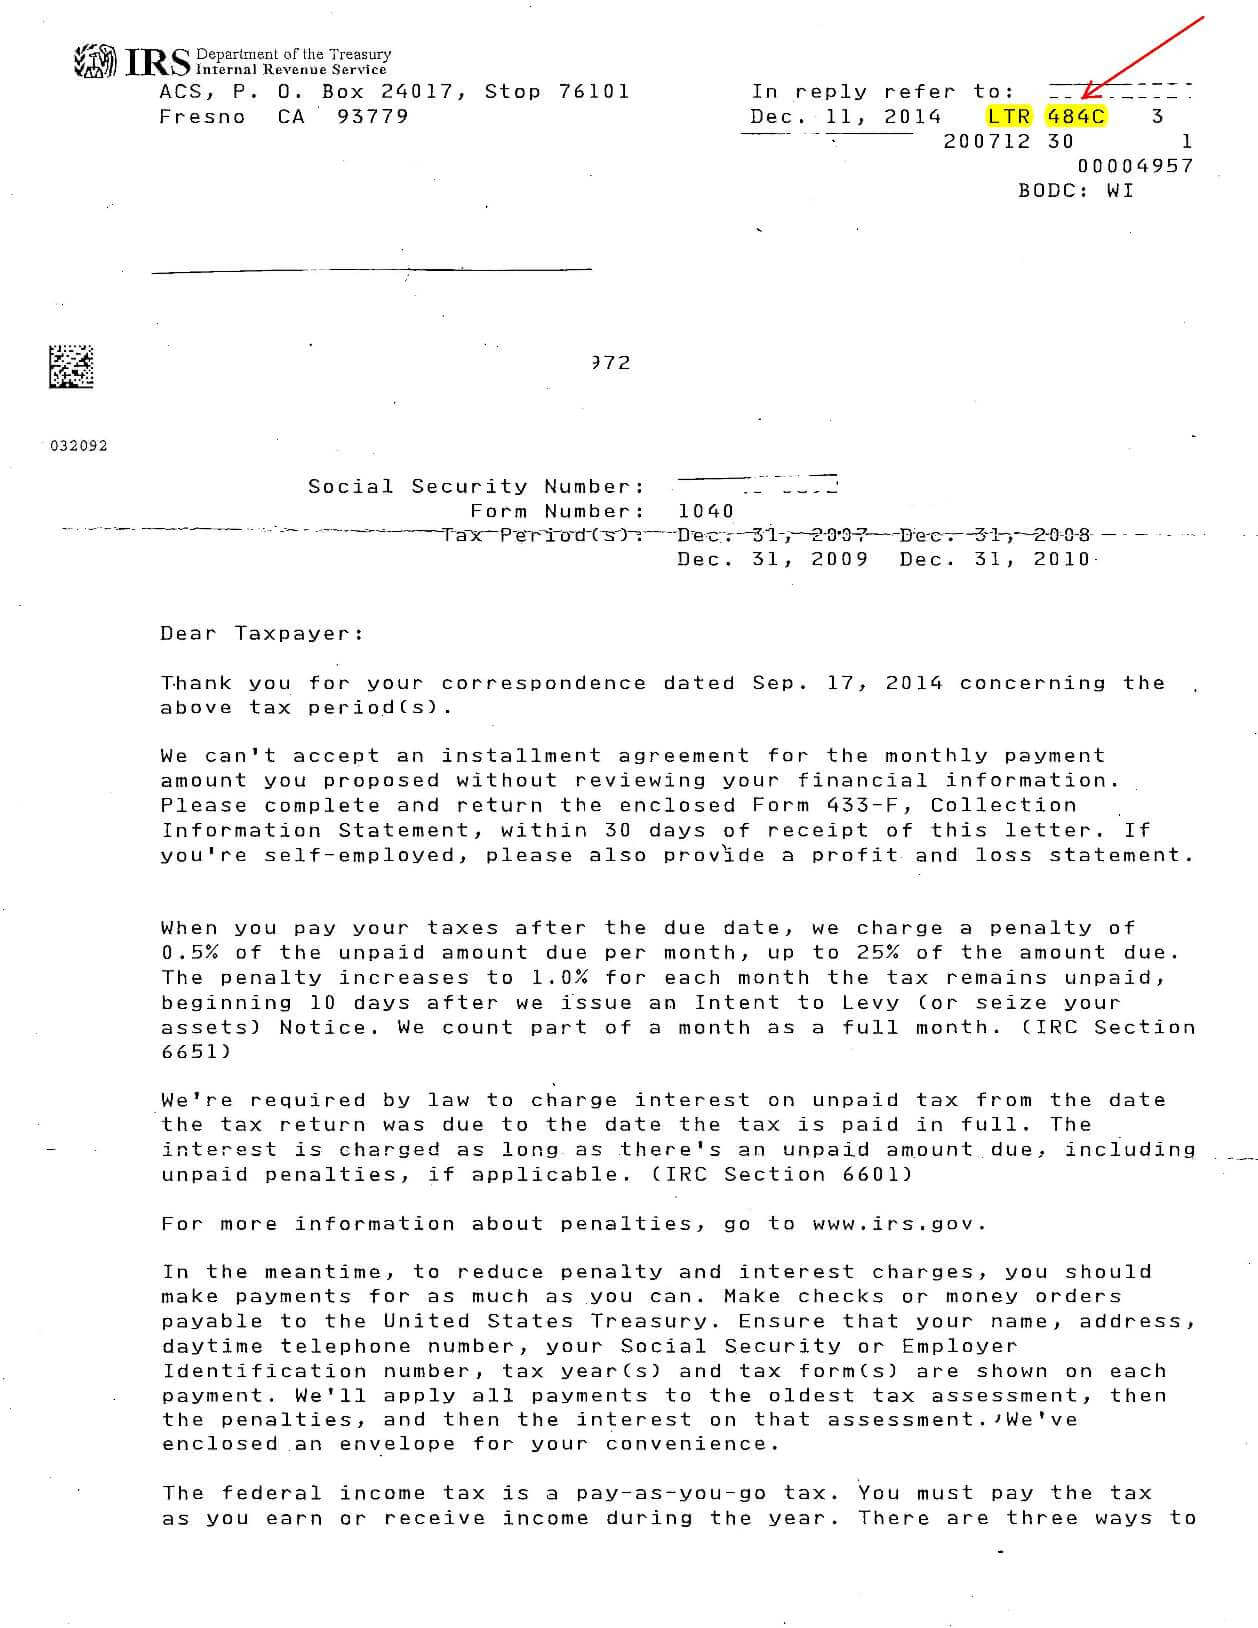 Letter 484C - Denying Installment Agreement